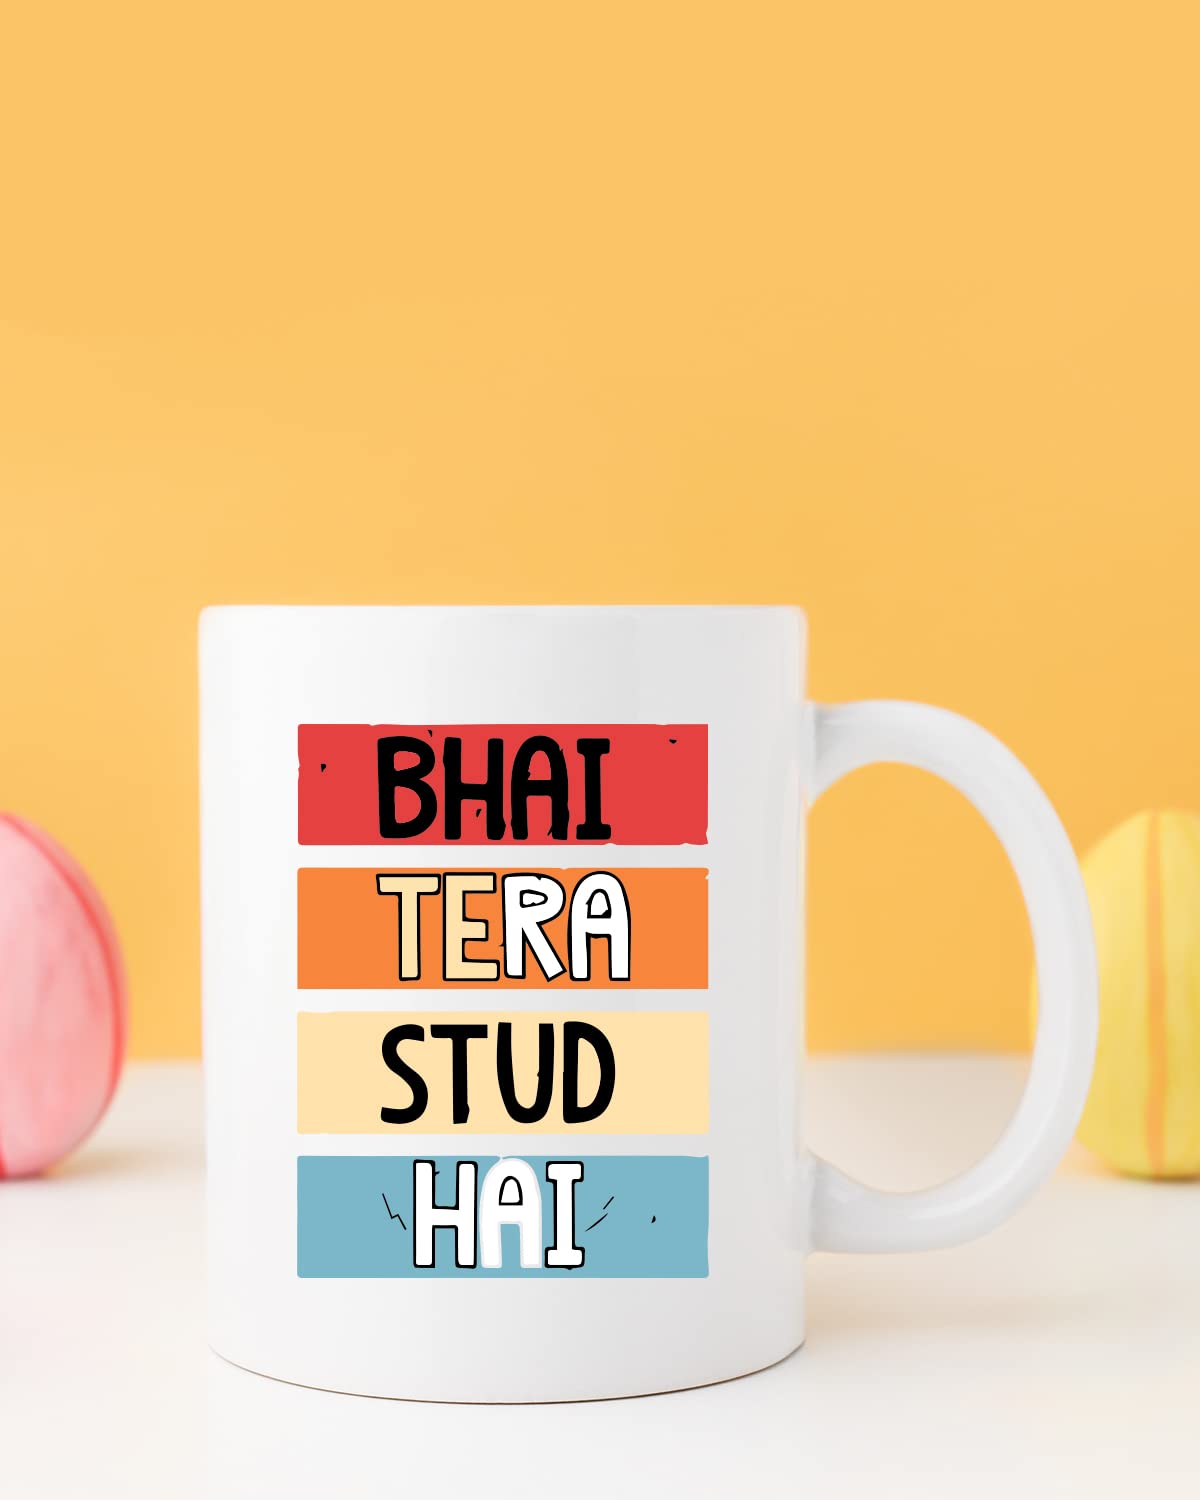 BHAI TERA Stud HAI Coffee Mug - Gift for Friend, Birthday Gift, Birthday Mug, Motivational Quotes Mug, Mugs with Funny & Funky Dialogues, Bollywood Mugs, Funny Mugs for Him & Her